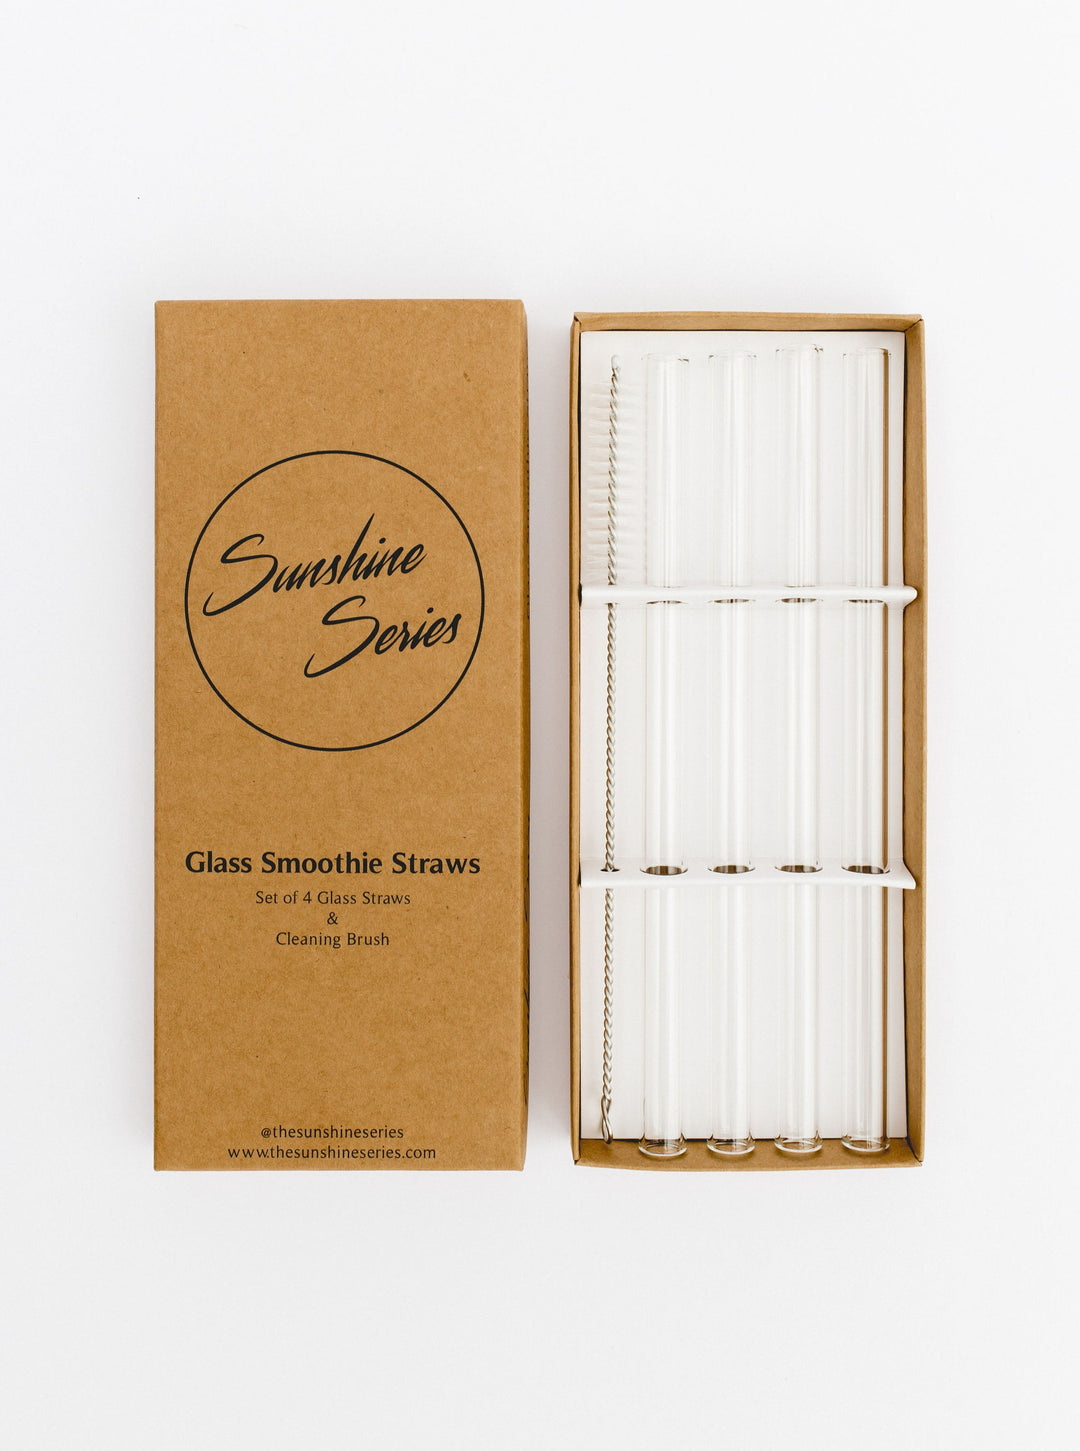 Glass Smoothie Straws